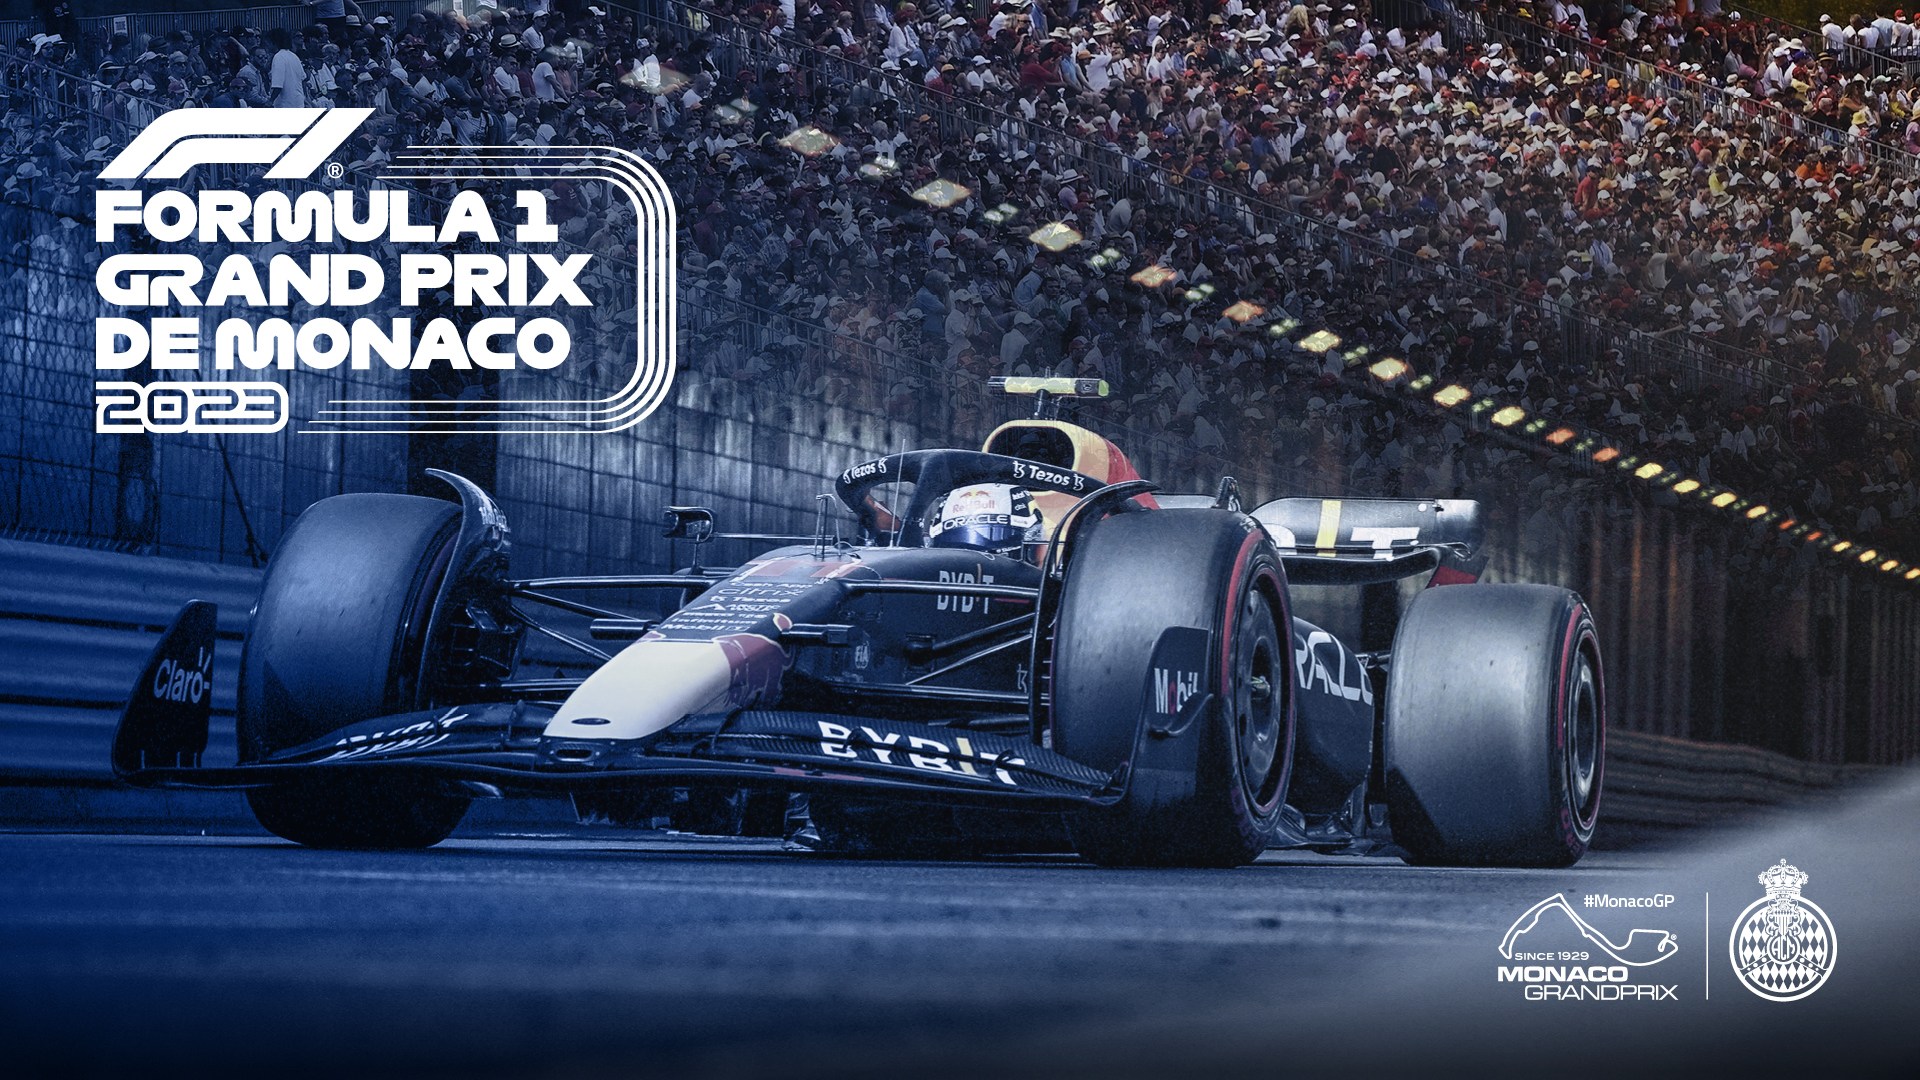 Formule 1 grand prix de Monaco